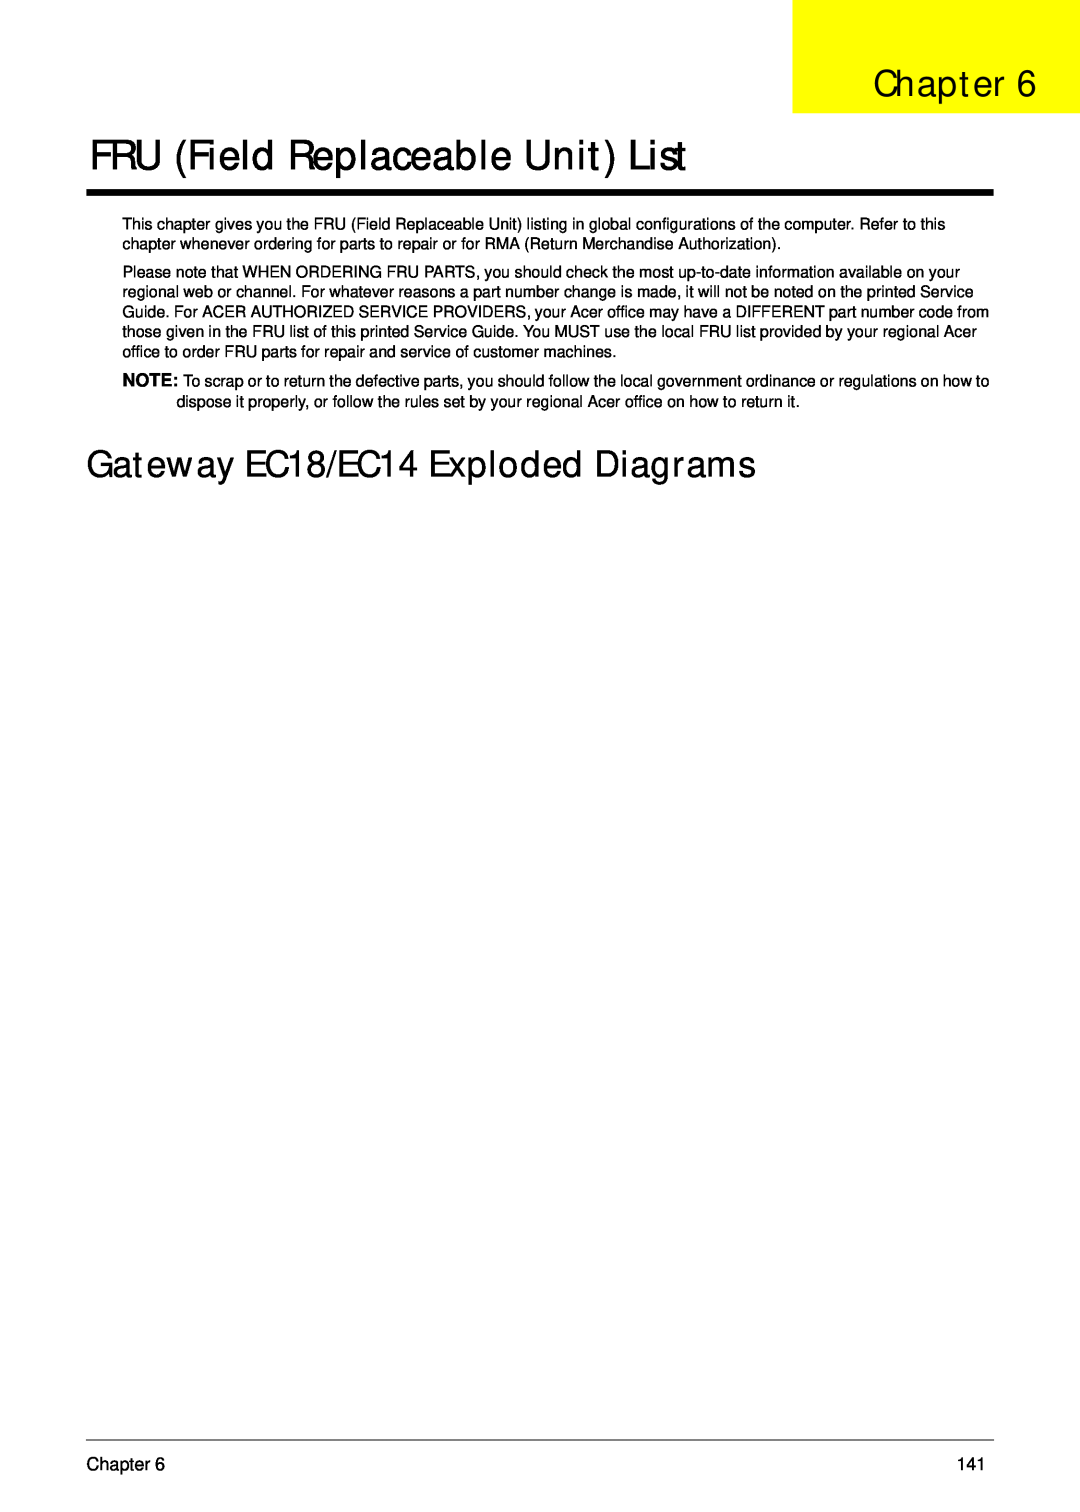 Gateway manual FRU Field Replaceable Unit List, Gateway EC18/EC14 Exploded Diagrams, Chapter 